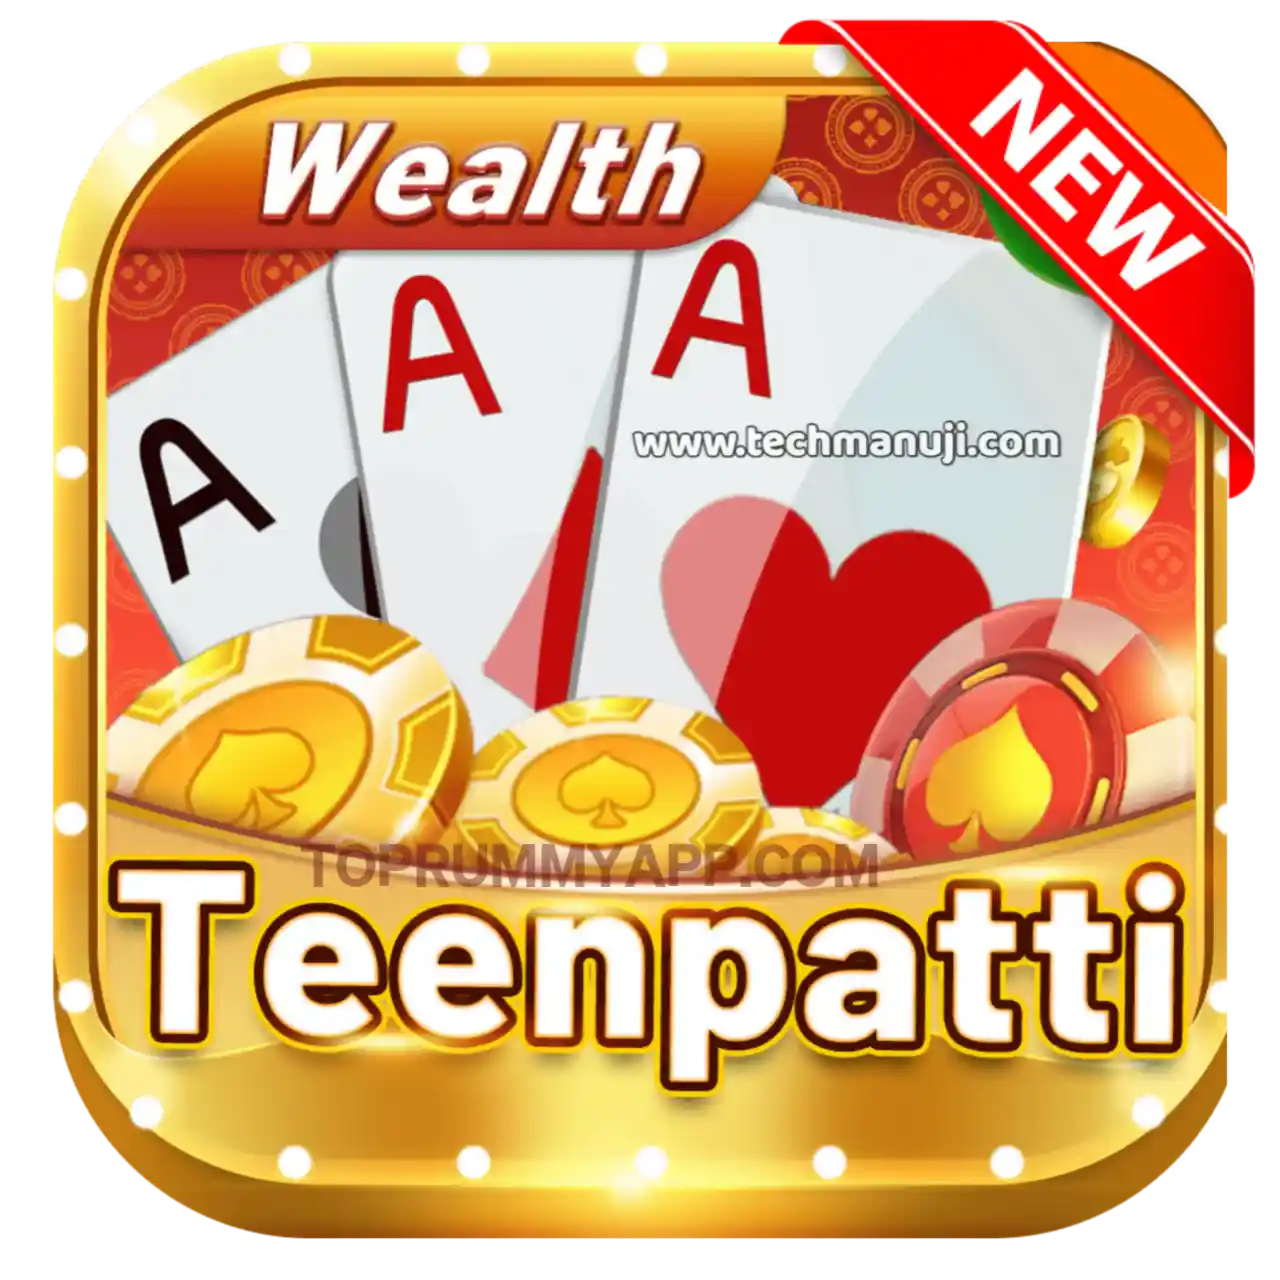 Teen Patti Wealth App Download